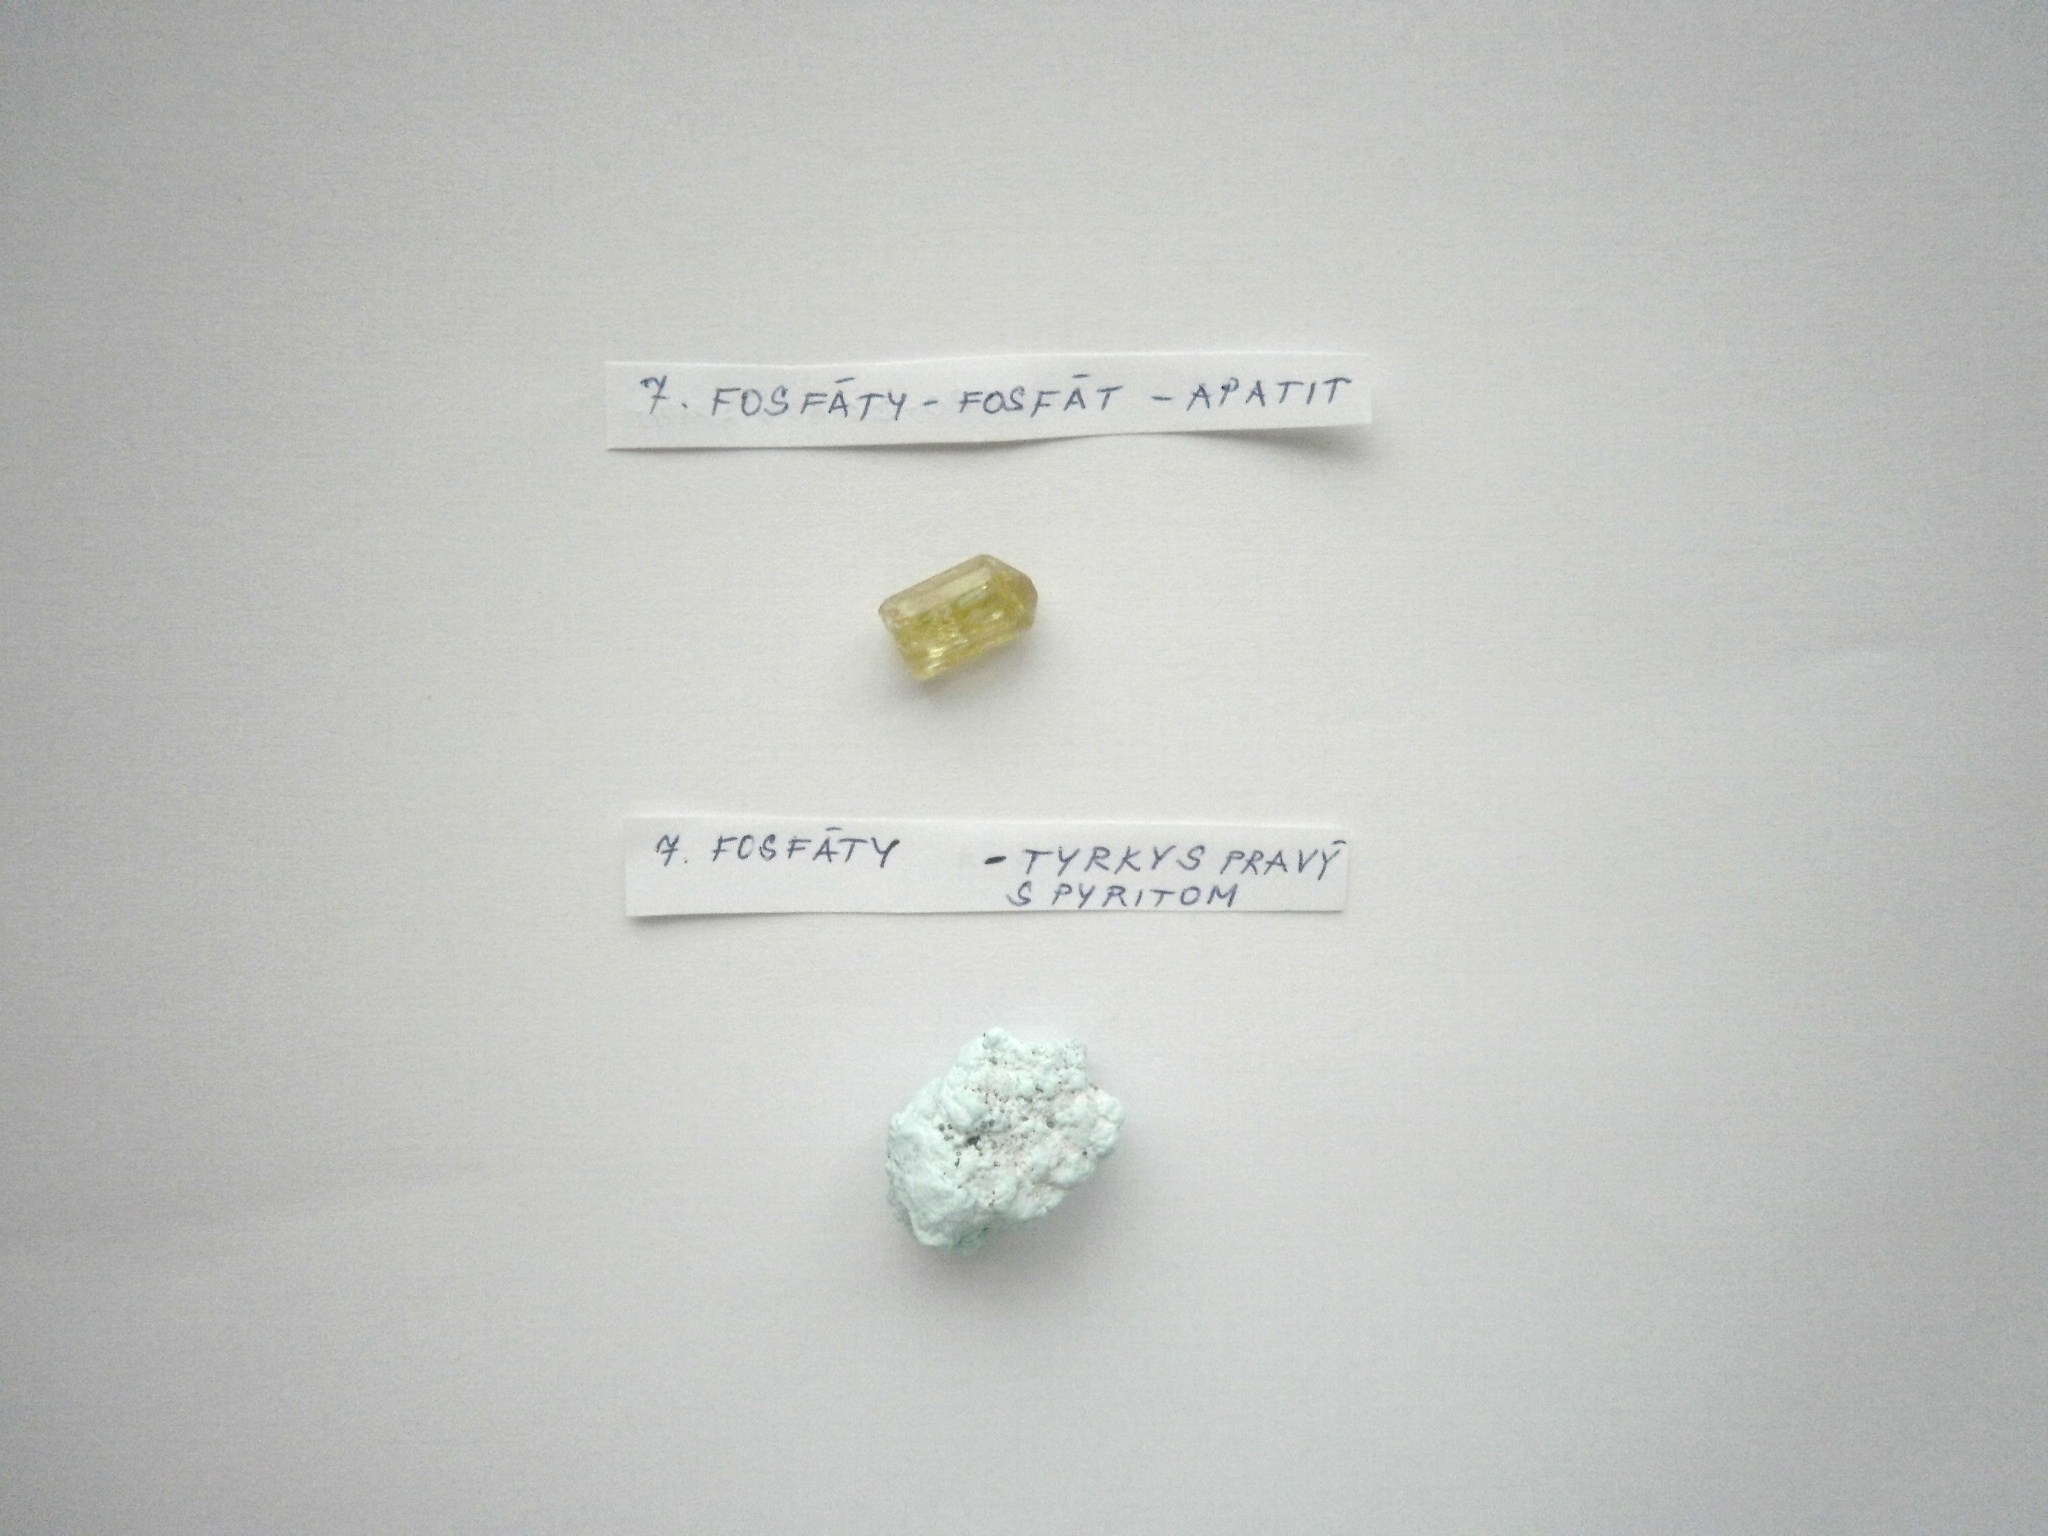 7.Fosfáty-apatit, tyrkys pravý s pyritom.JPG